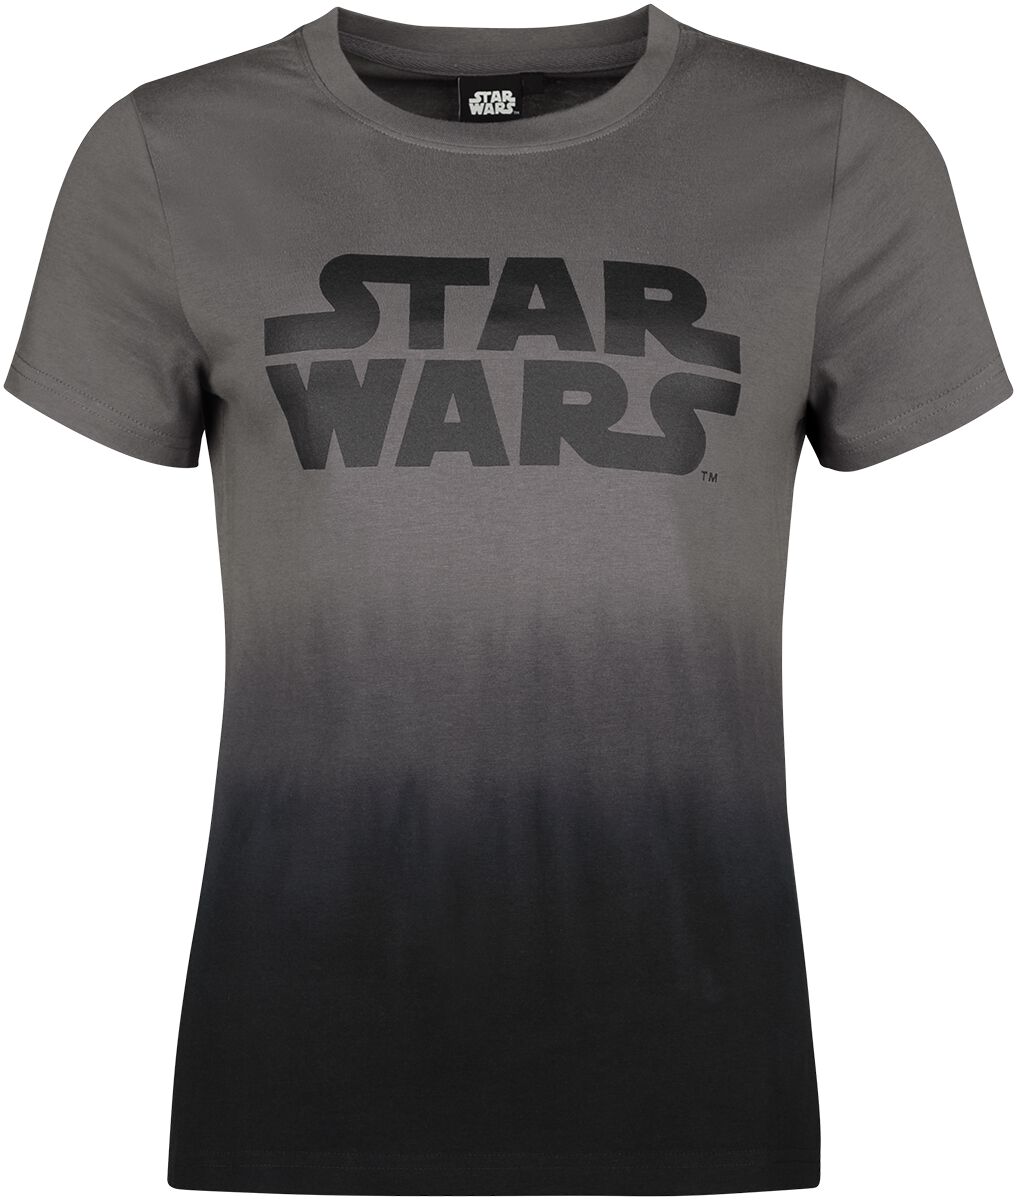 Star Wars Star Wars T-Shirt multicolor in XXL